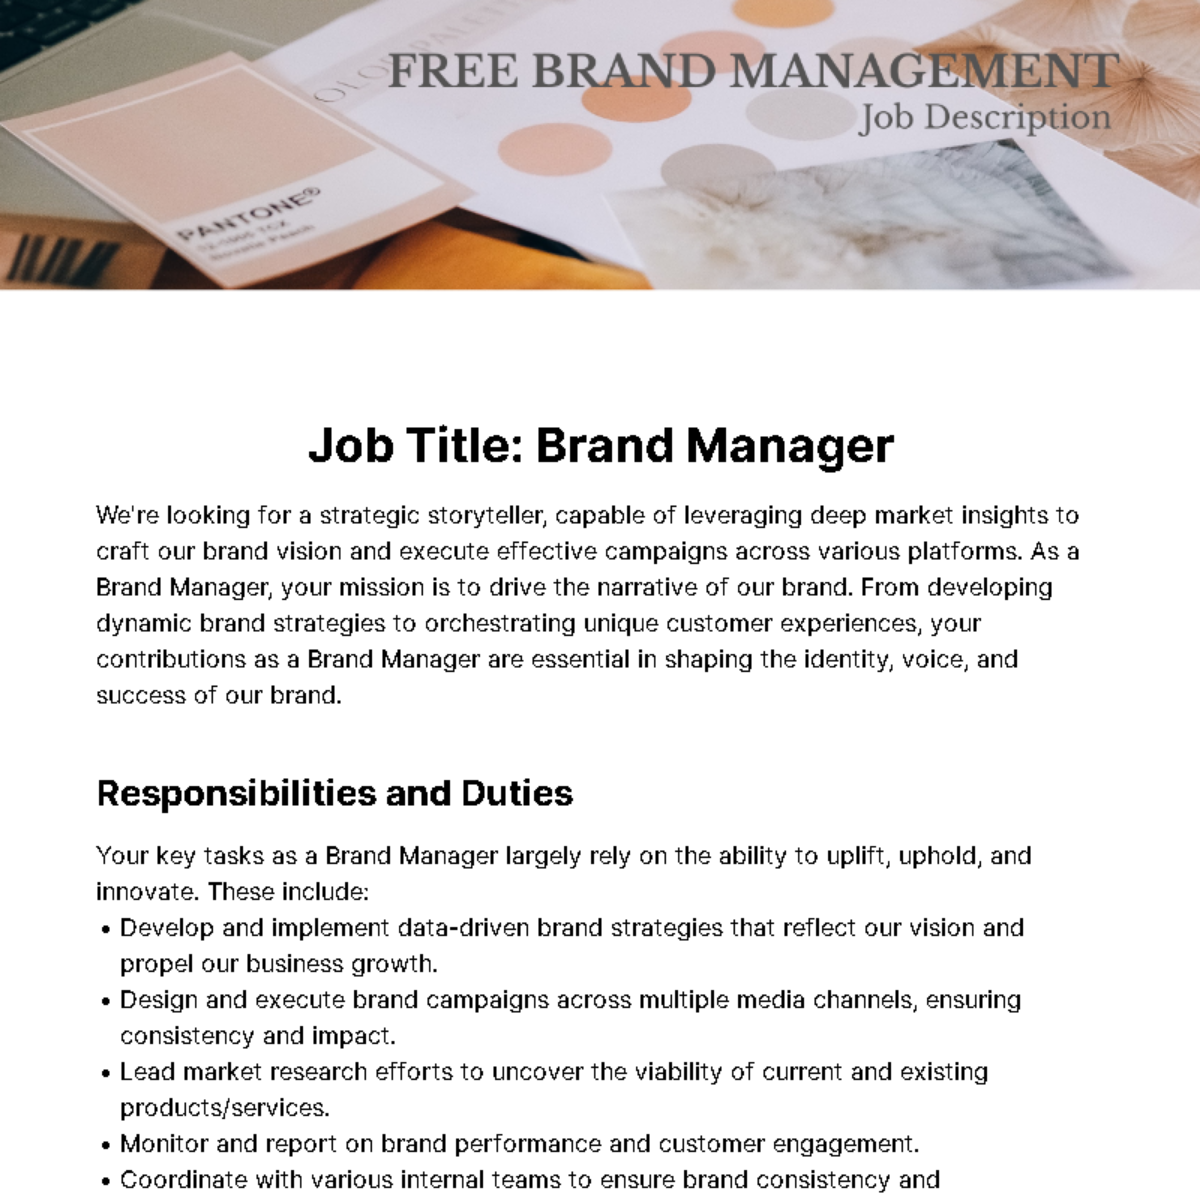 Free Brand Management Job Description Template